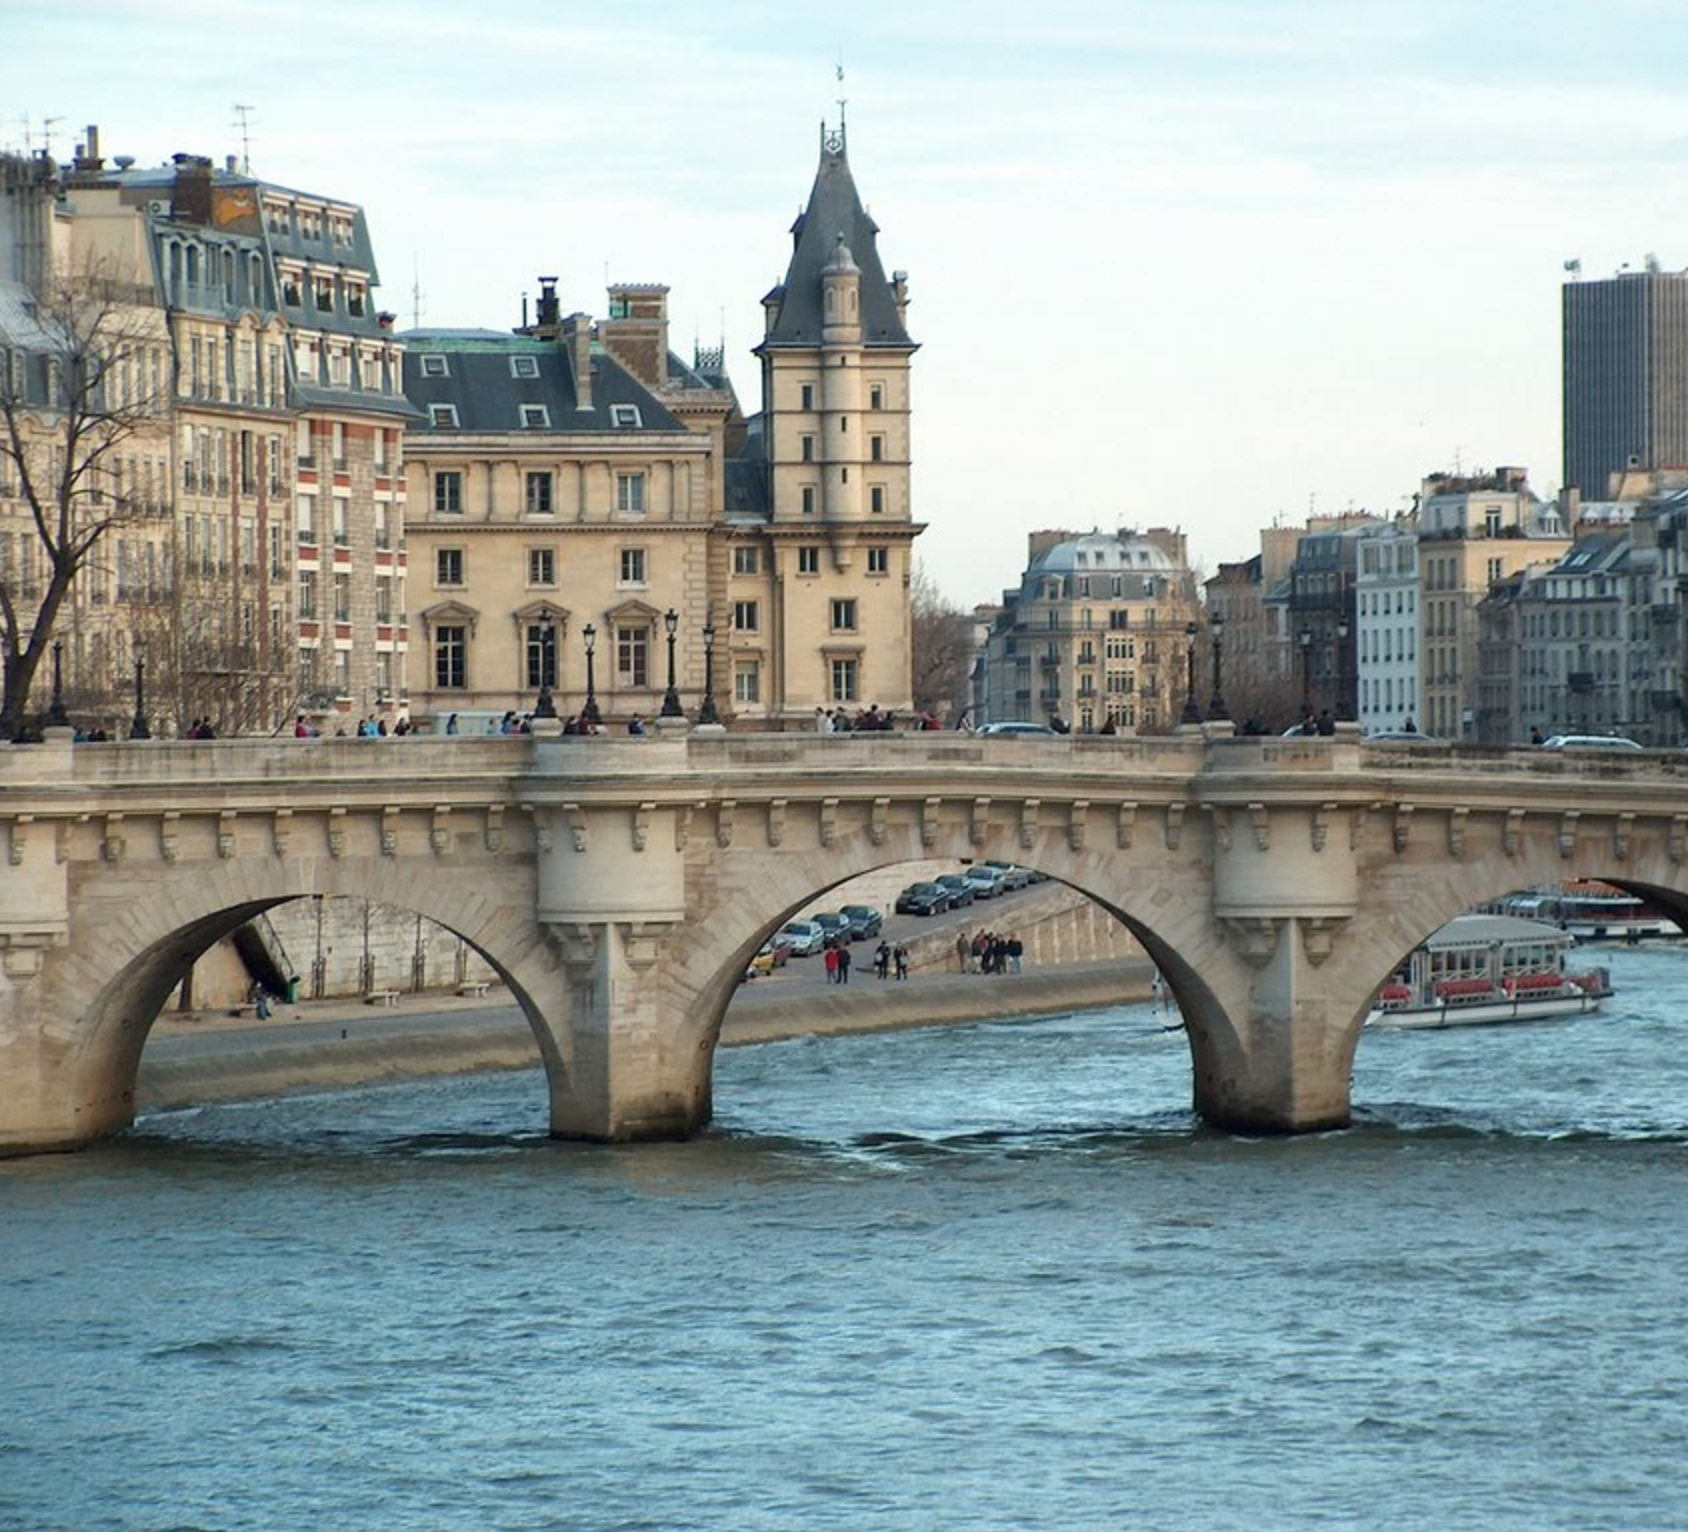 Пон вид. Понт Неф в Париже. Мост нёф в Париже. Pont neuf в Париже. Мост Пон Неф.